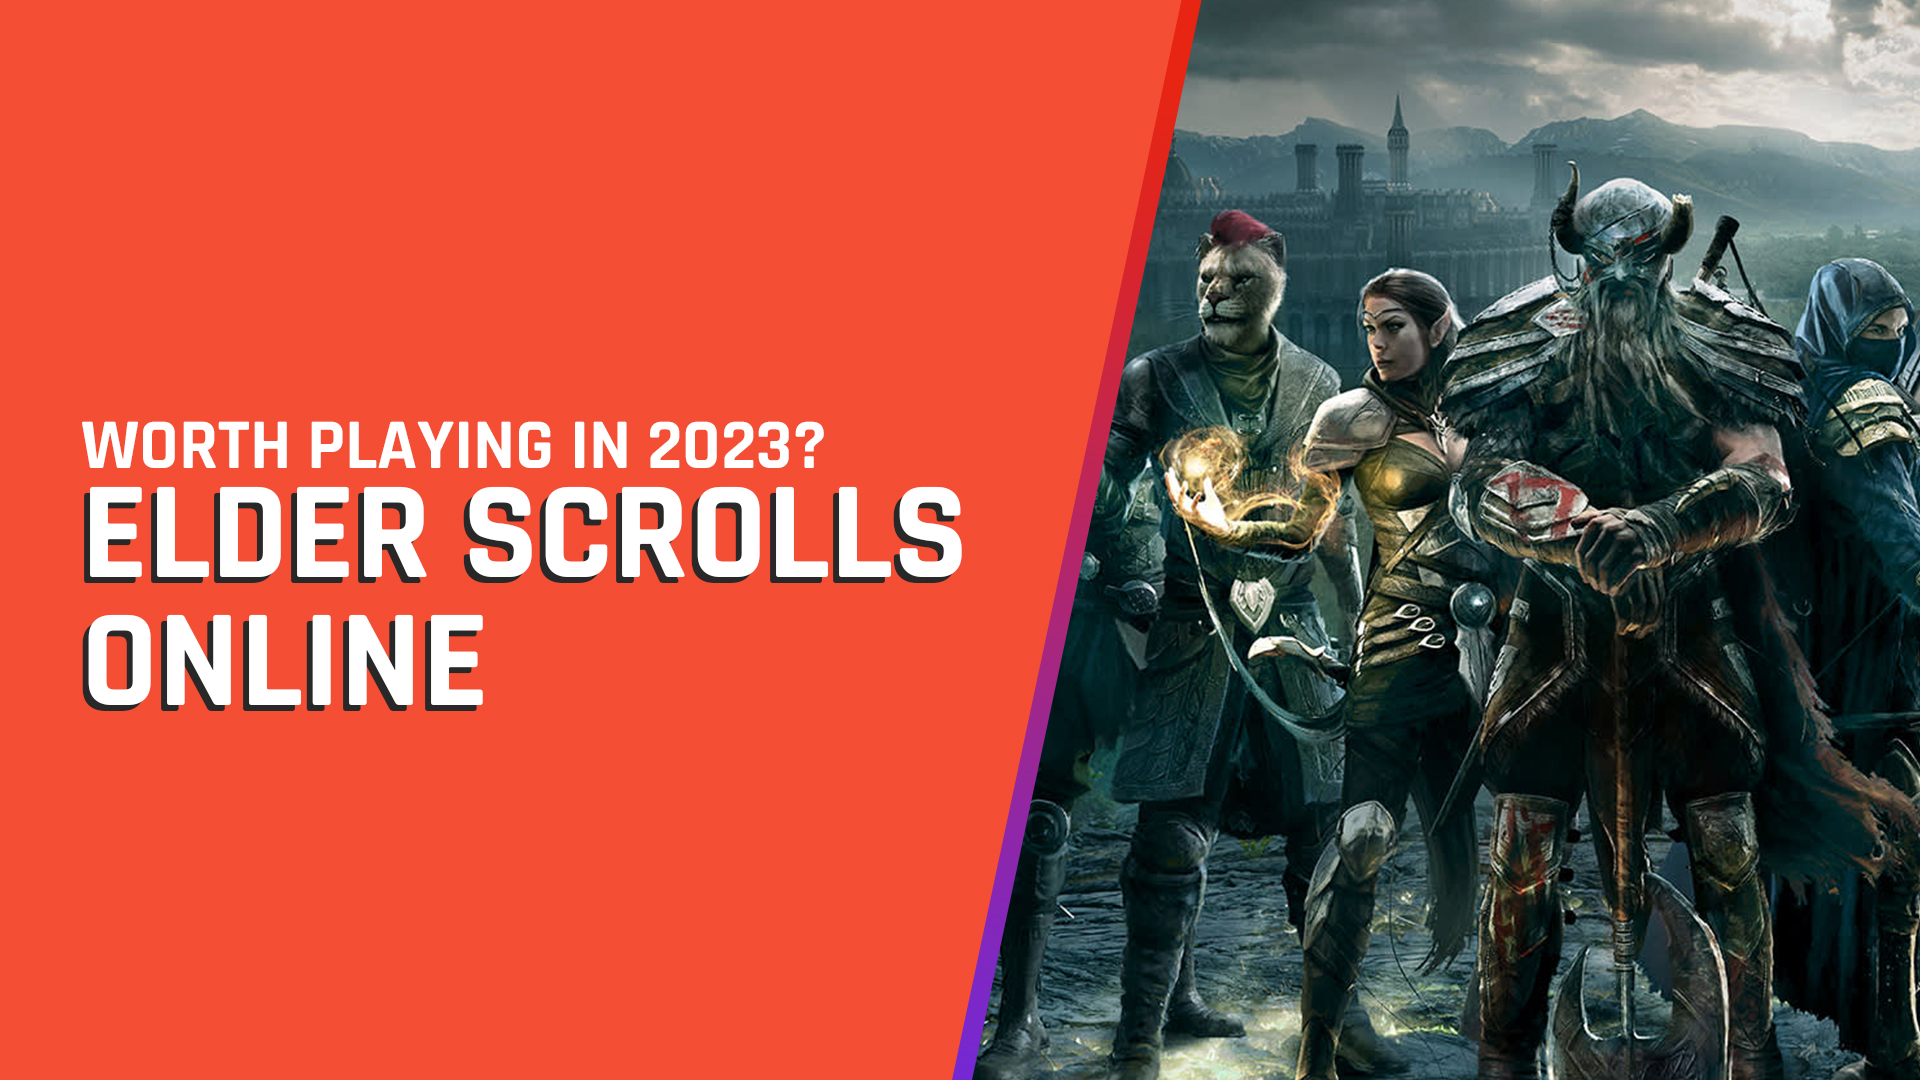 The Elder Scrolls Online Update 39 Patch Notes (July 20, 2023) - News